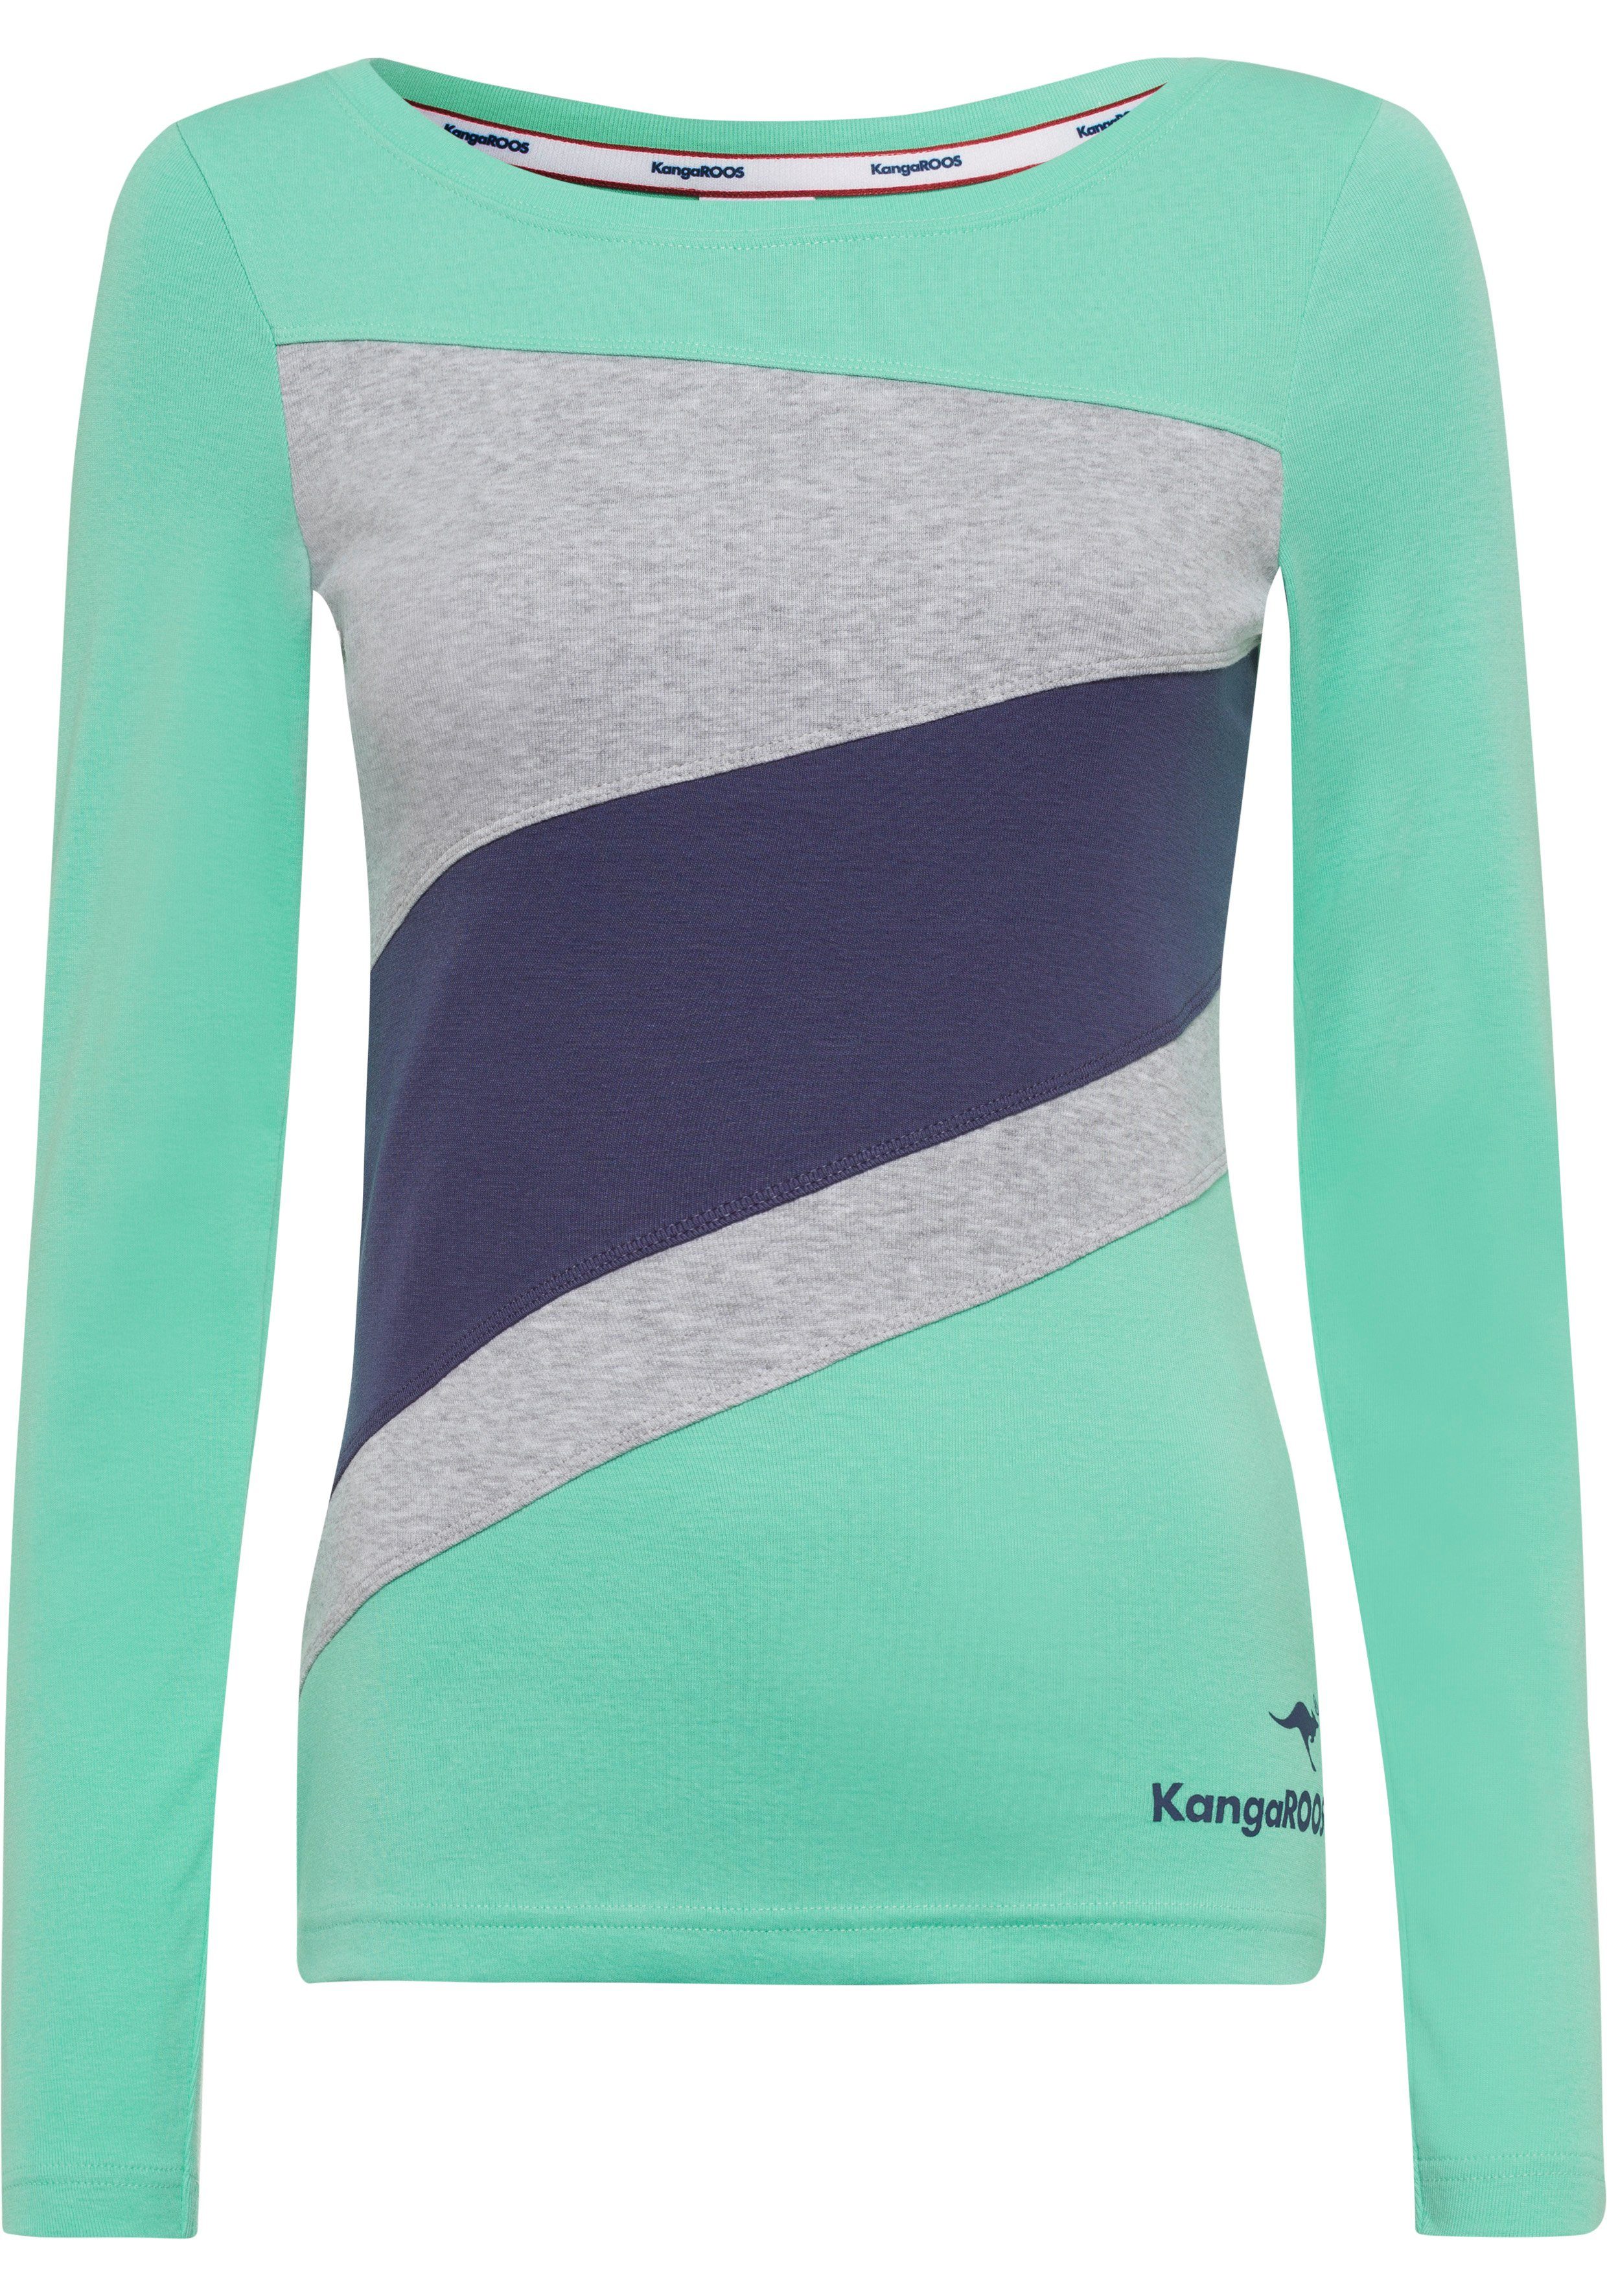 KangaROOS Longsleeve mit vorne Color Details Blocking hellgrün-grau-marine